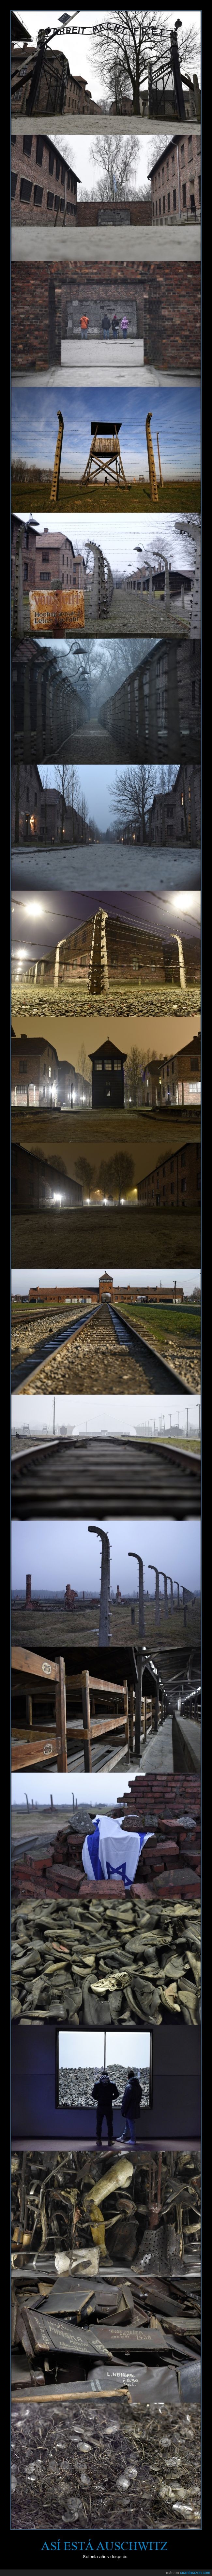 Auschwitz,setenta,años,después,gafas,restos,zapatos,maletas,holocausto,nazismo,nazi,la tardis?